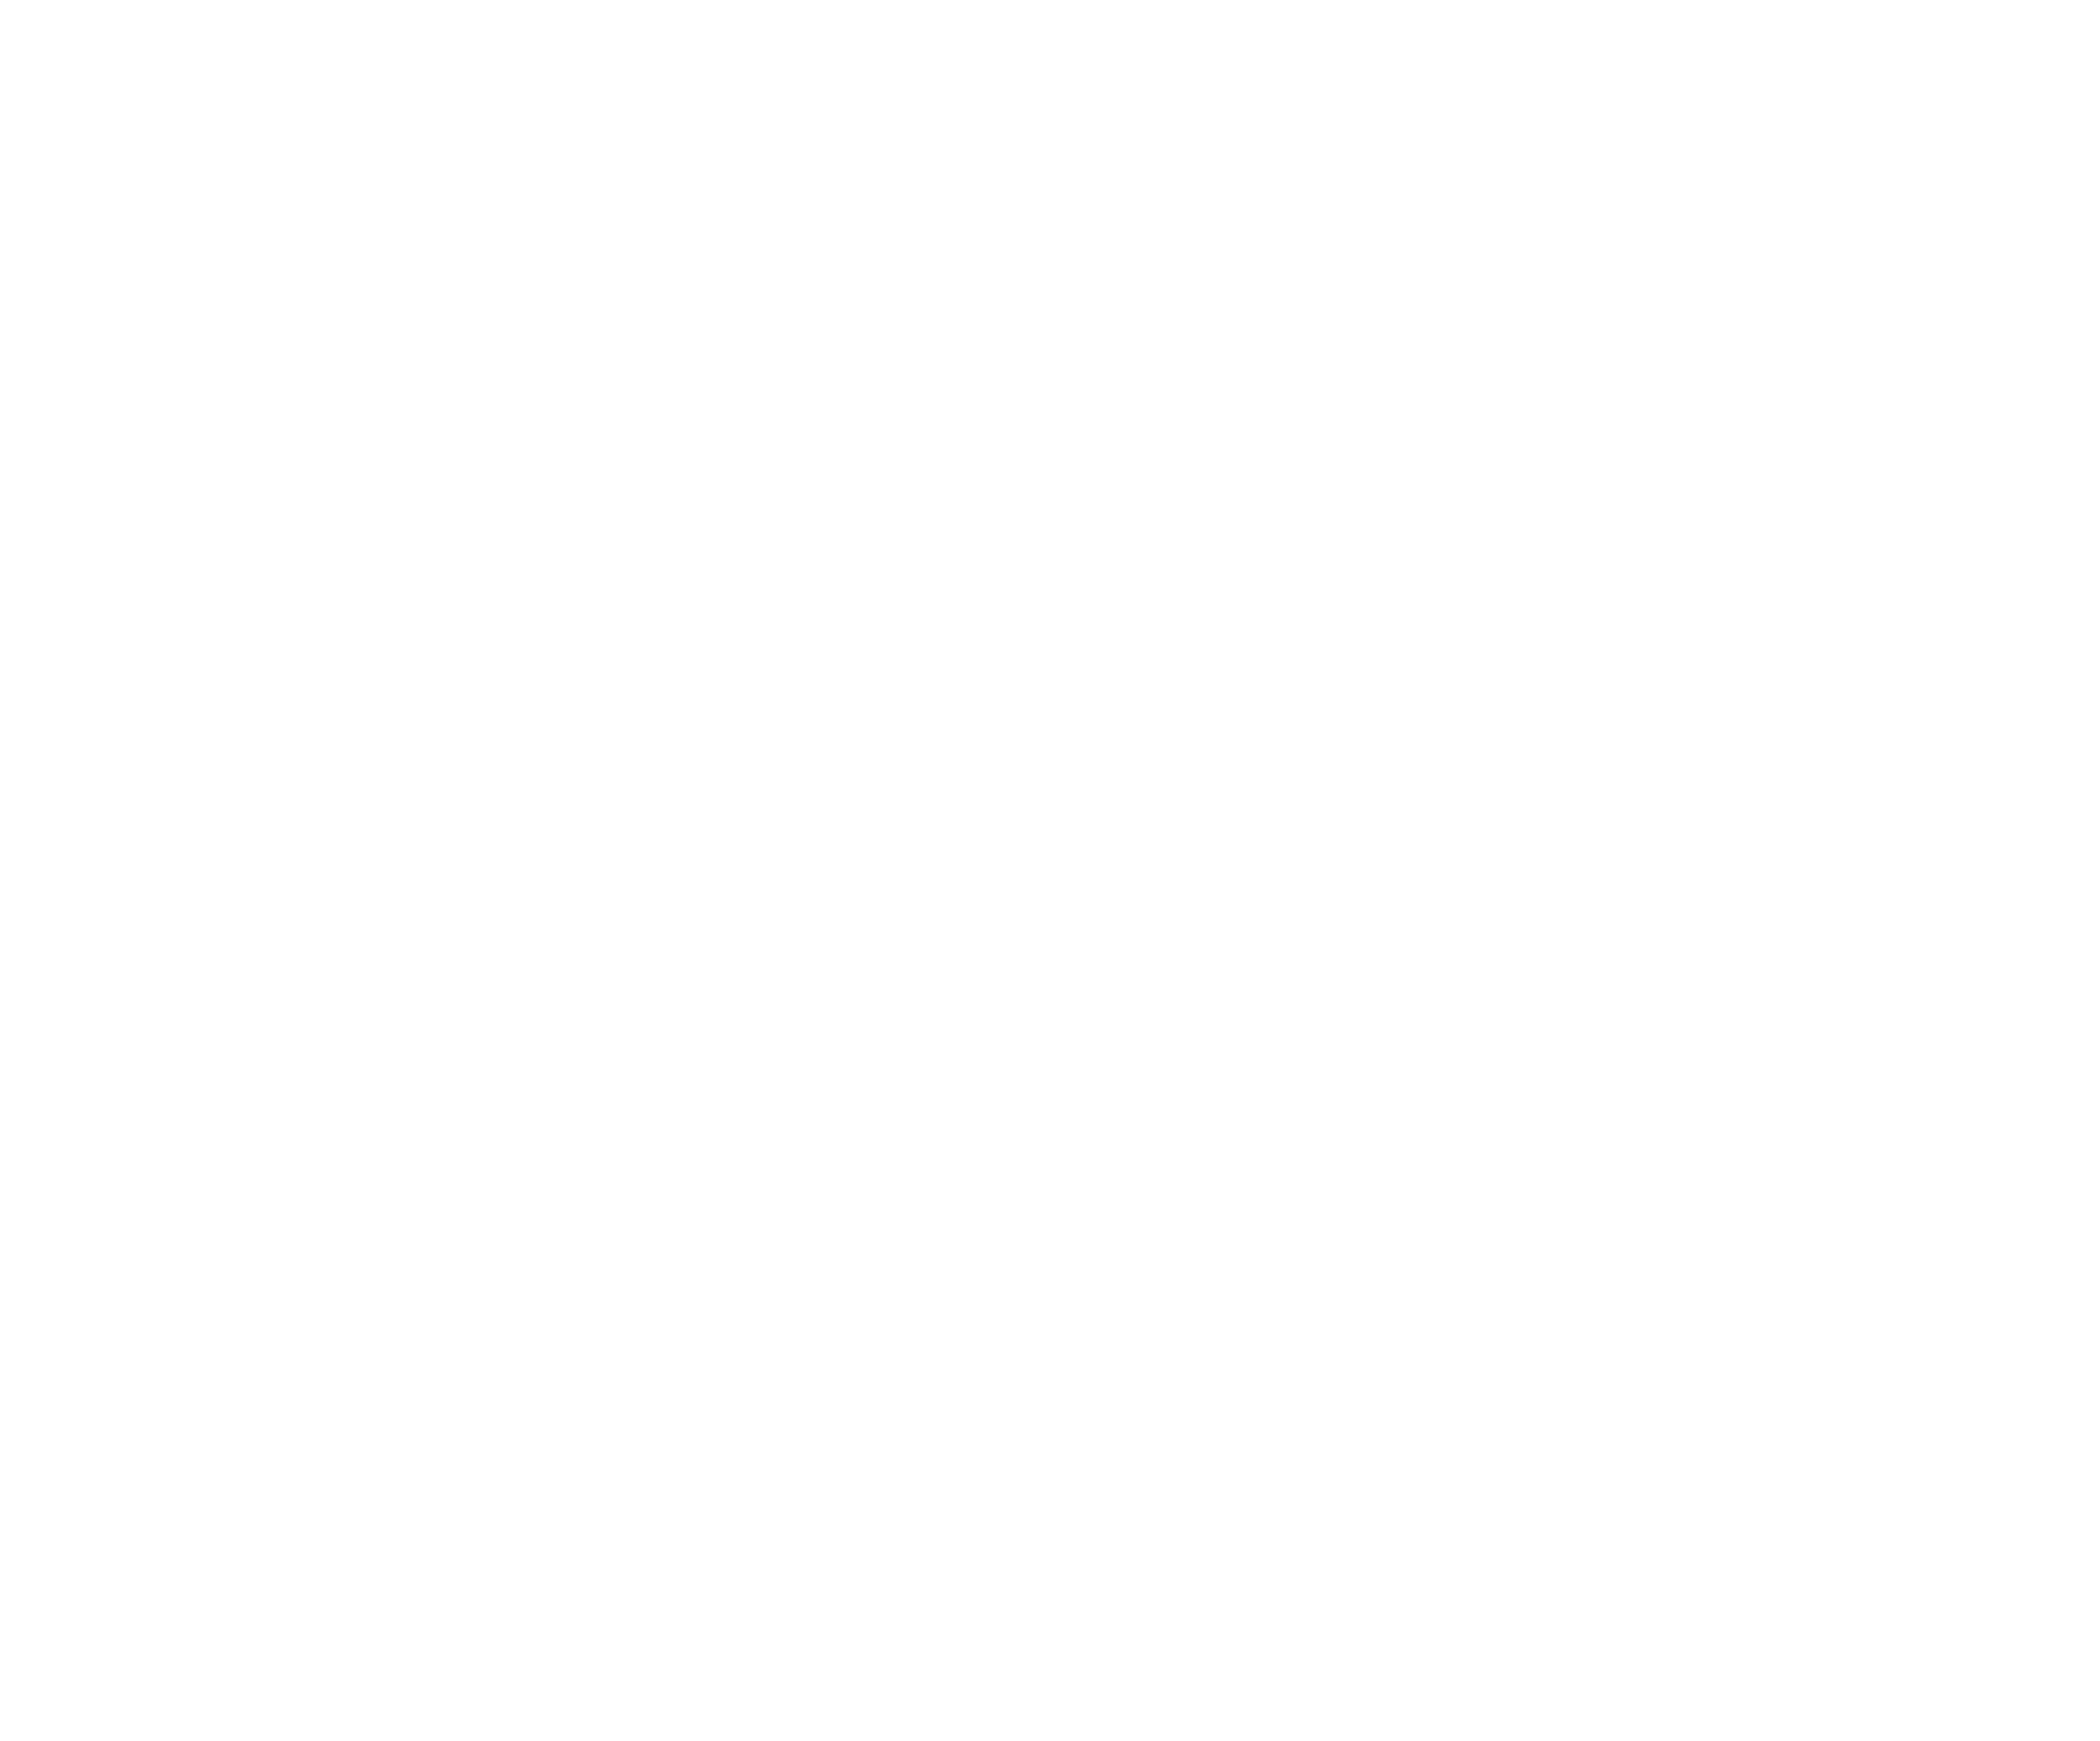 Maibaumverein Hagenheim e.V.